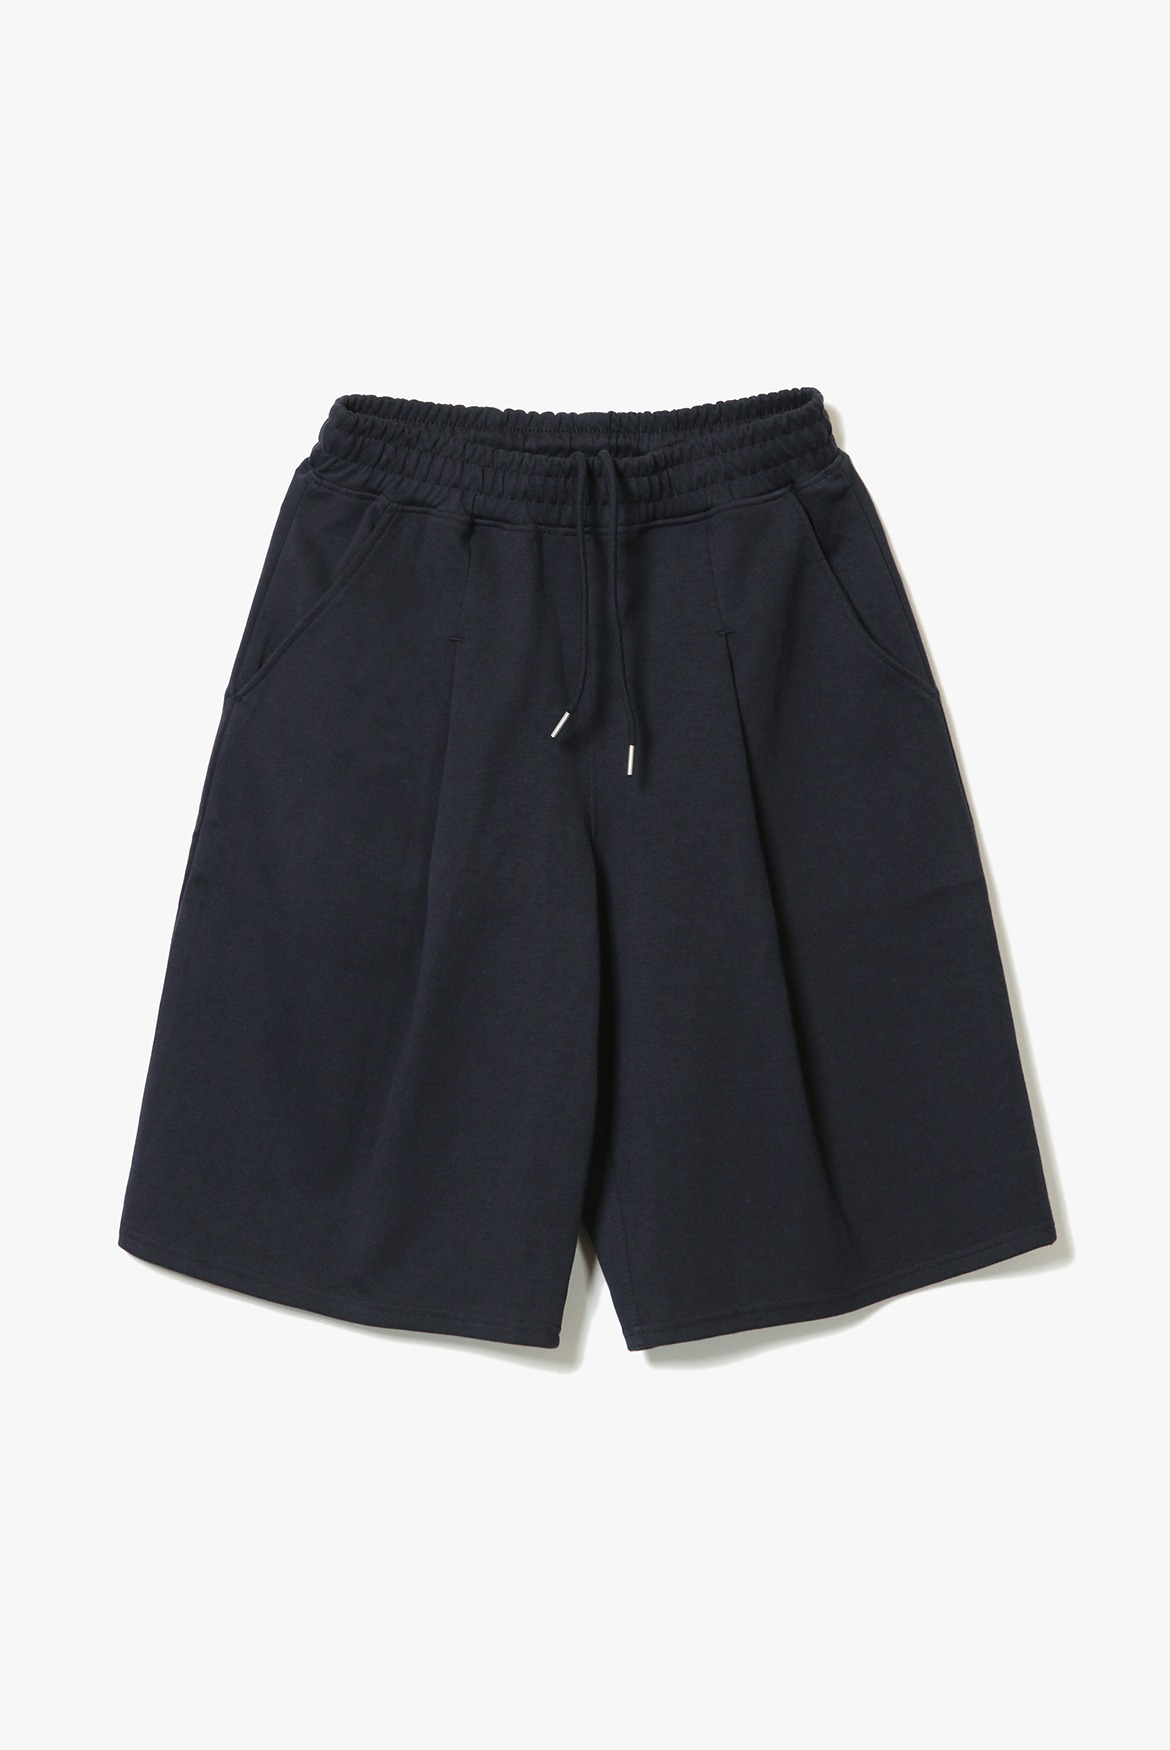 Deep One Tuck Sweat Shorts [Navy]